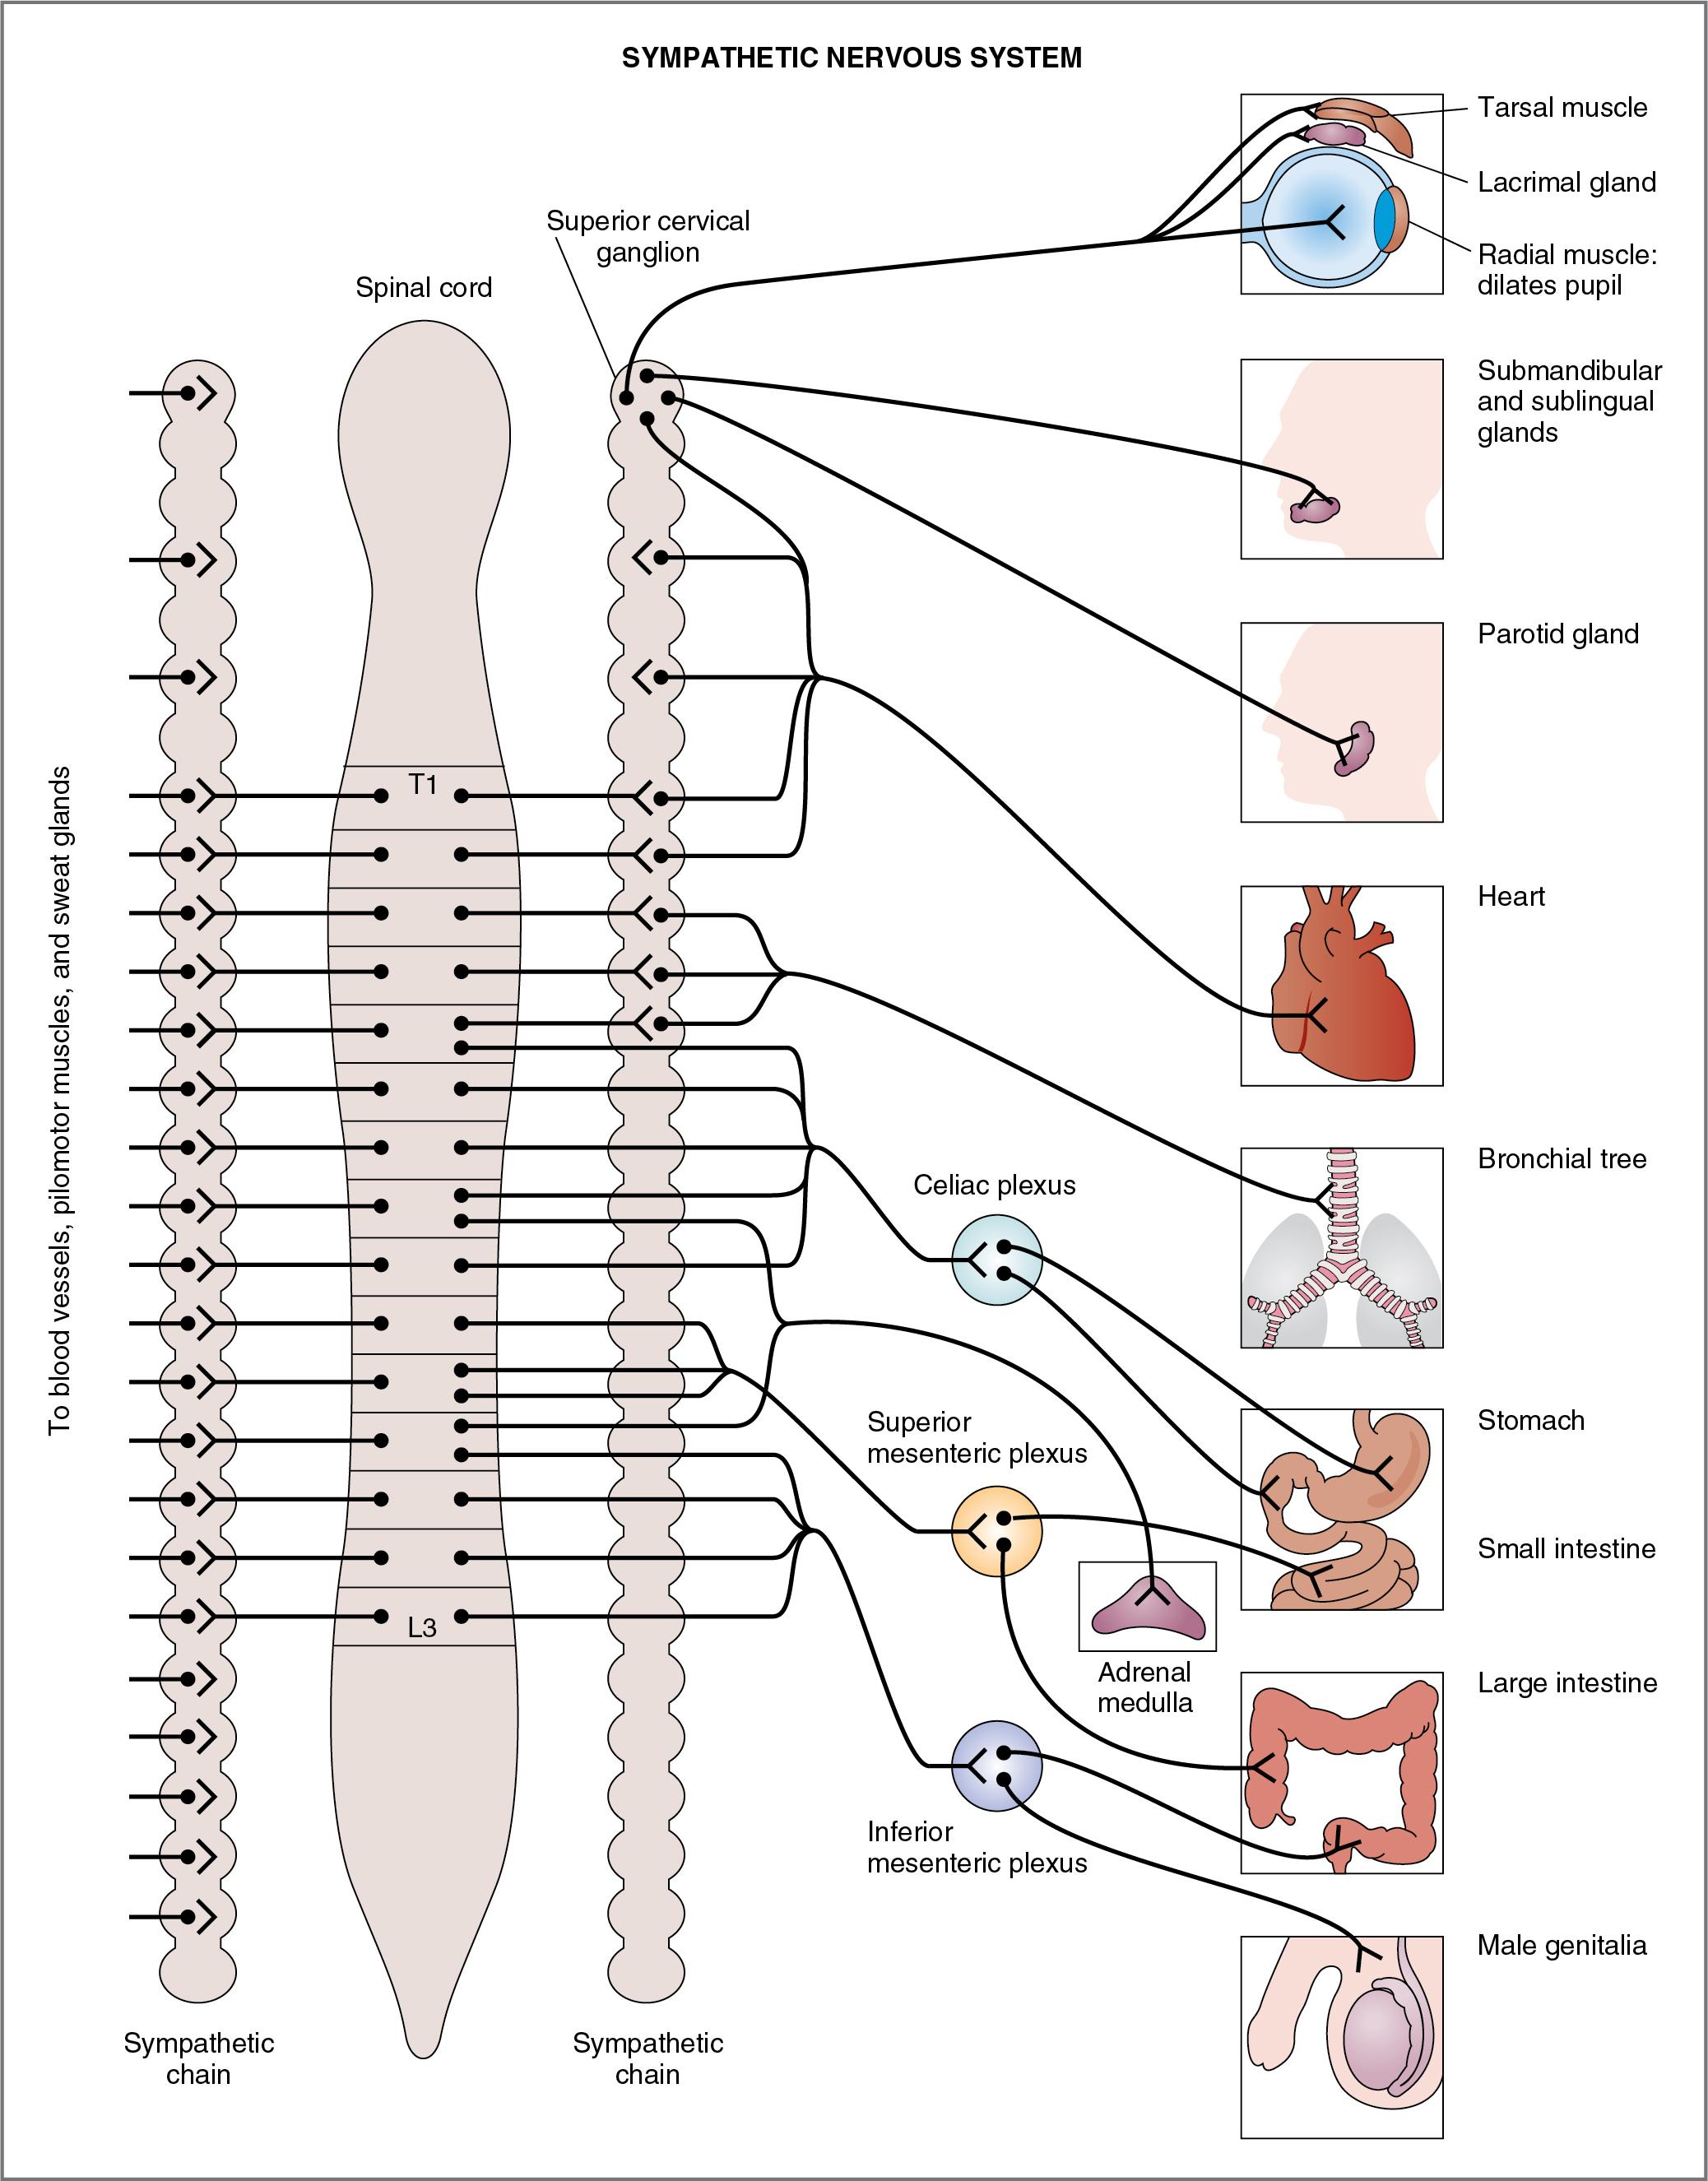 Fig. 2.2, Innervation of the sympathetic nervous system.